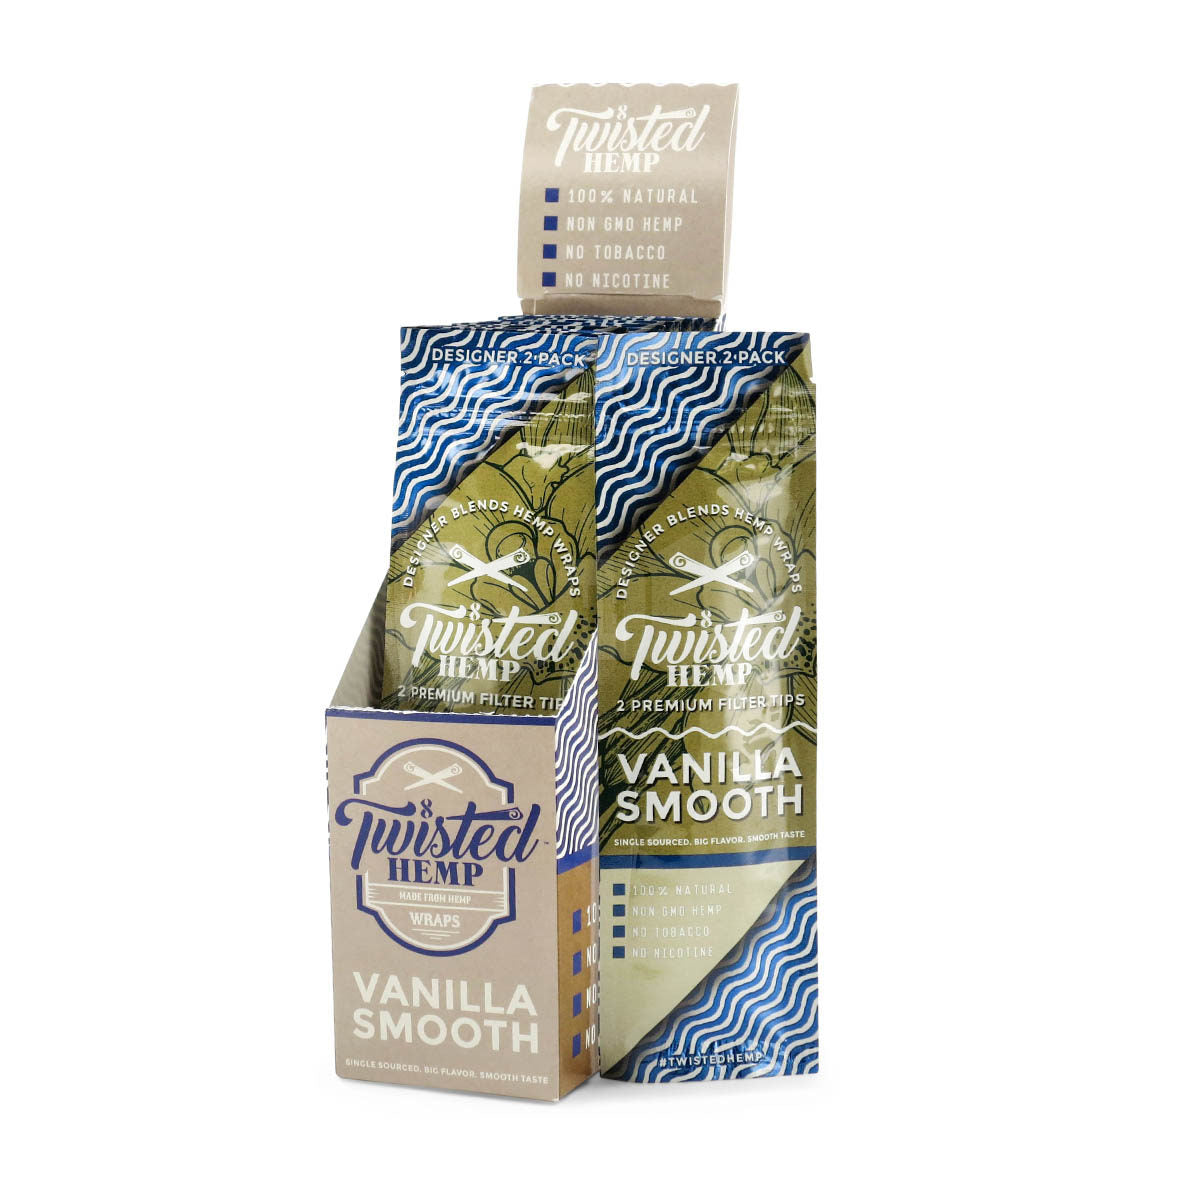 twisted hemp wraps vanilla smooth wholesale box 15